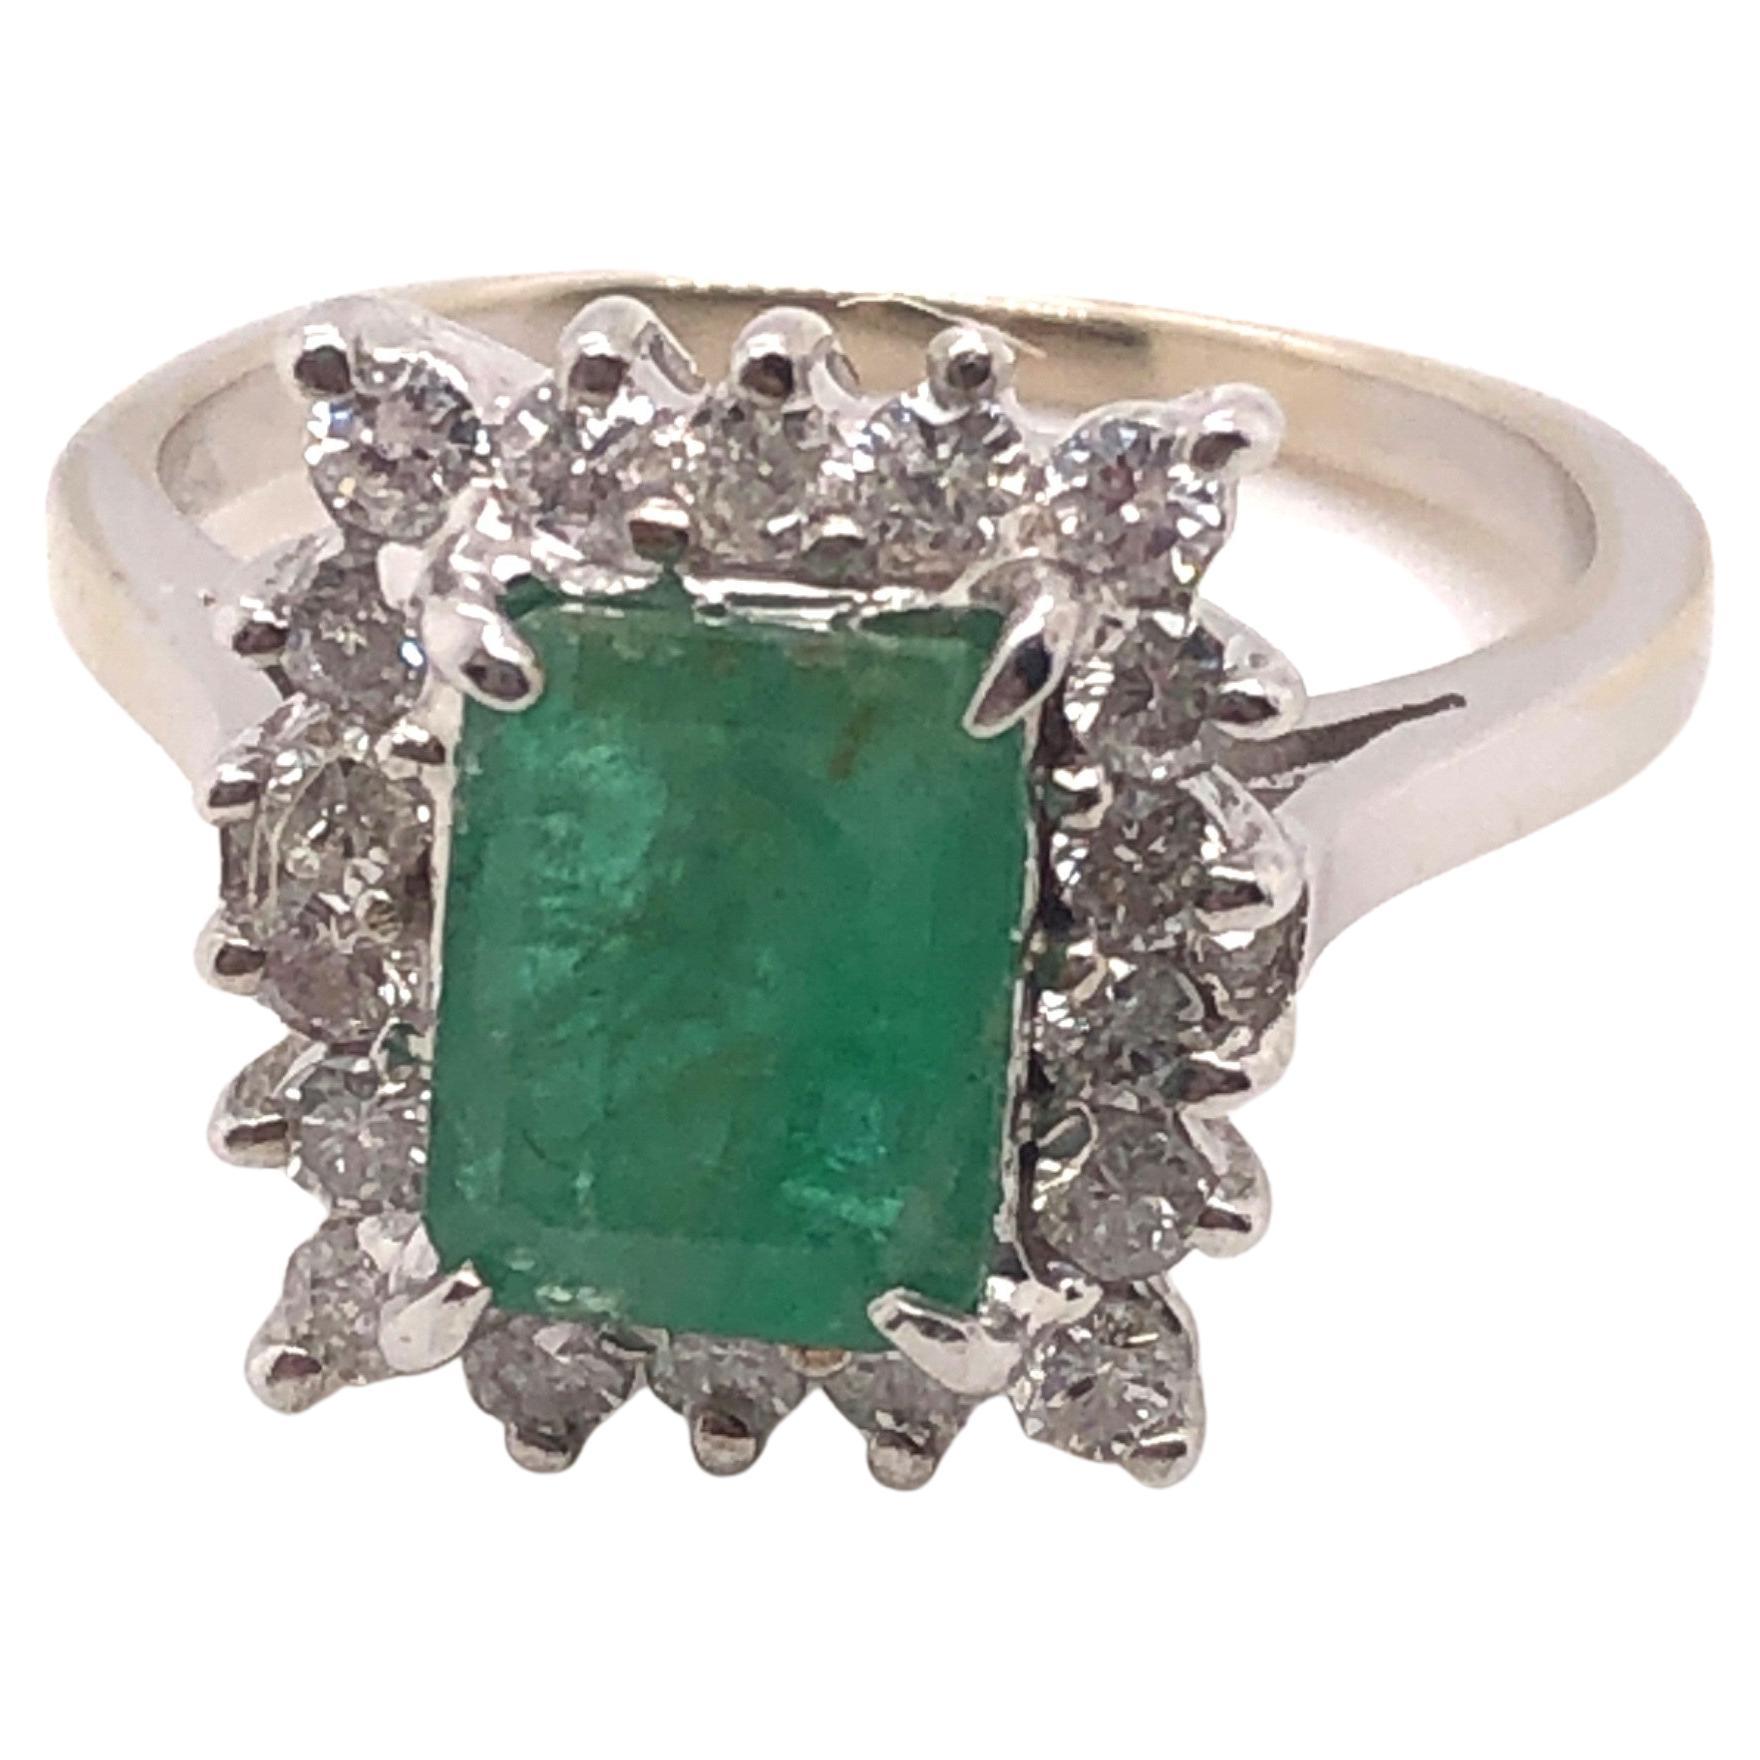 14kt Emerald Cut Emerald Ring with Diamond Halo